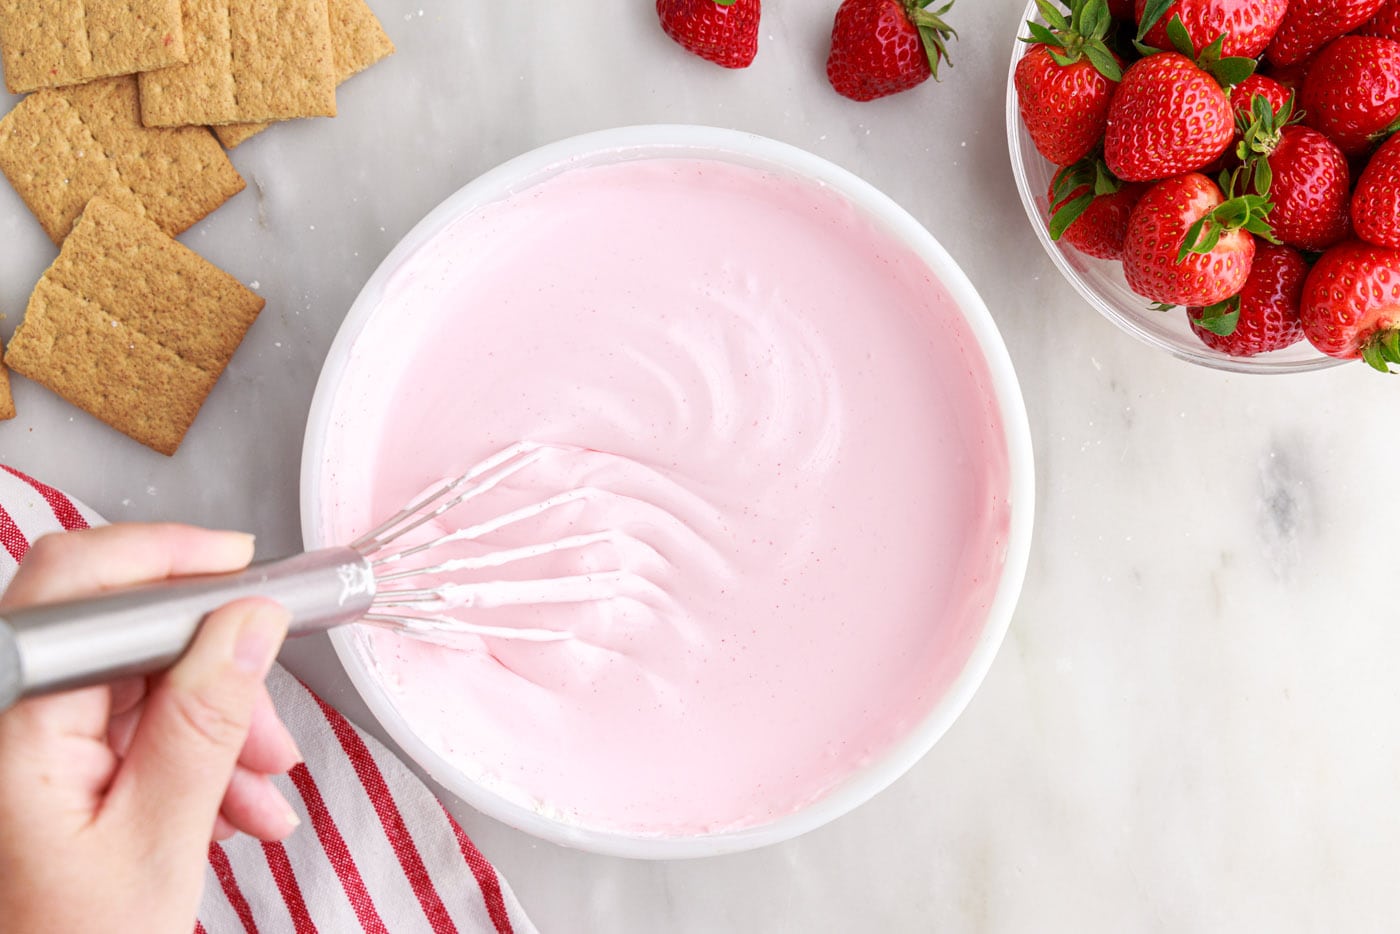 strawberry gelatin whipped cream